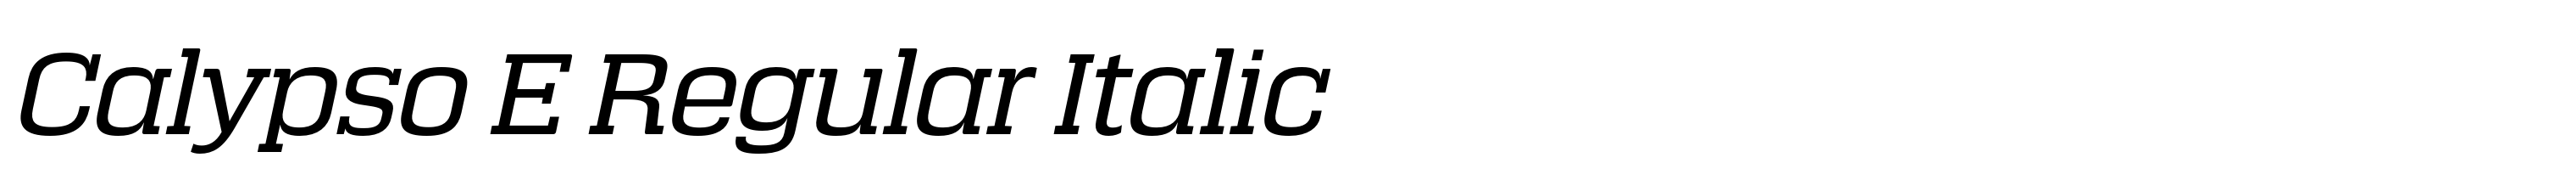 Calypso E Regular Italic